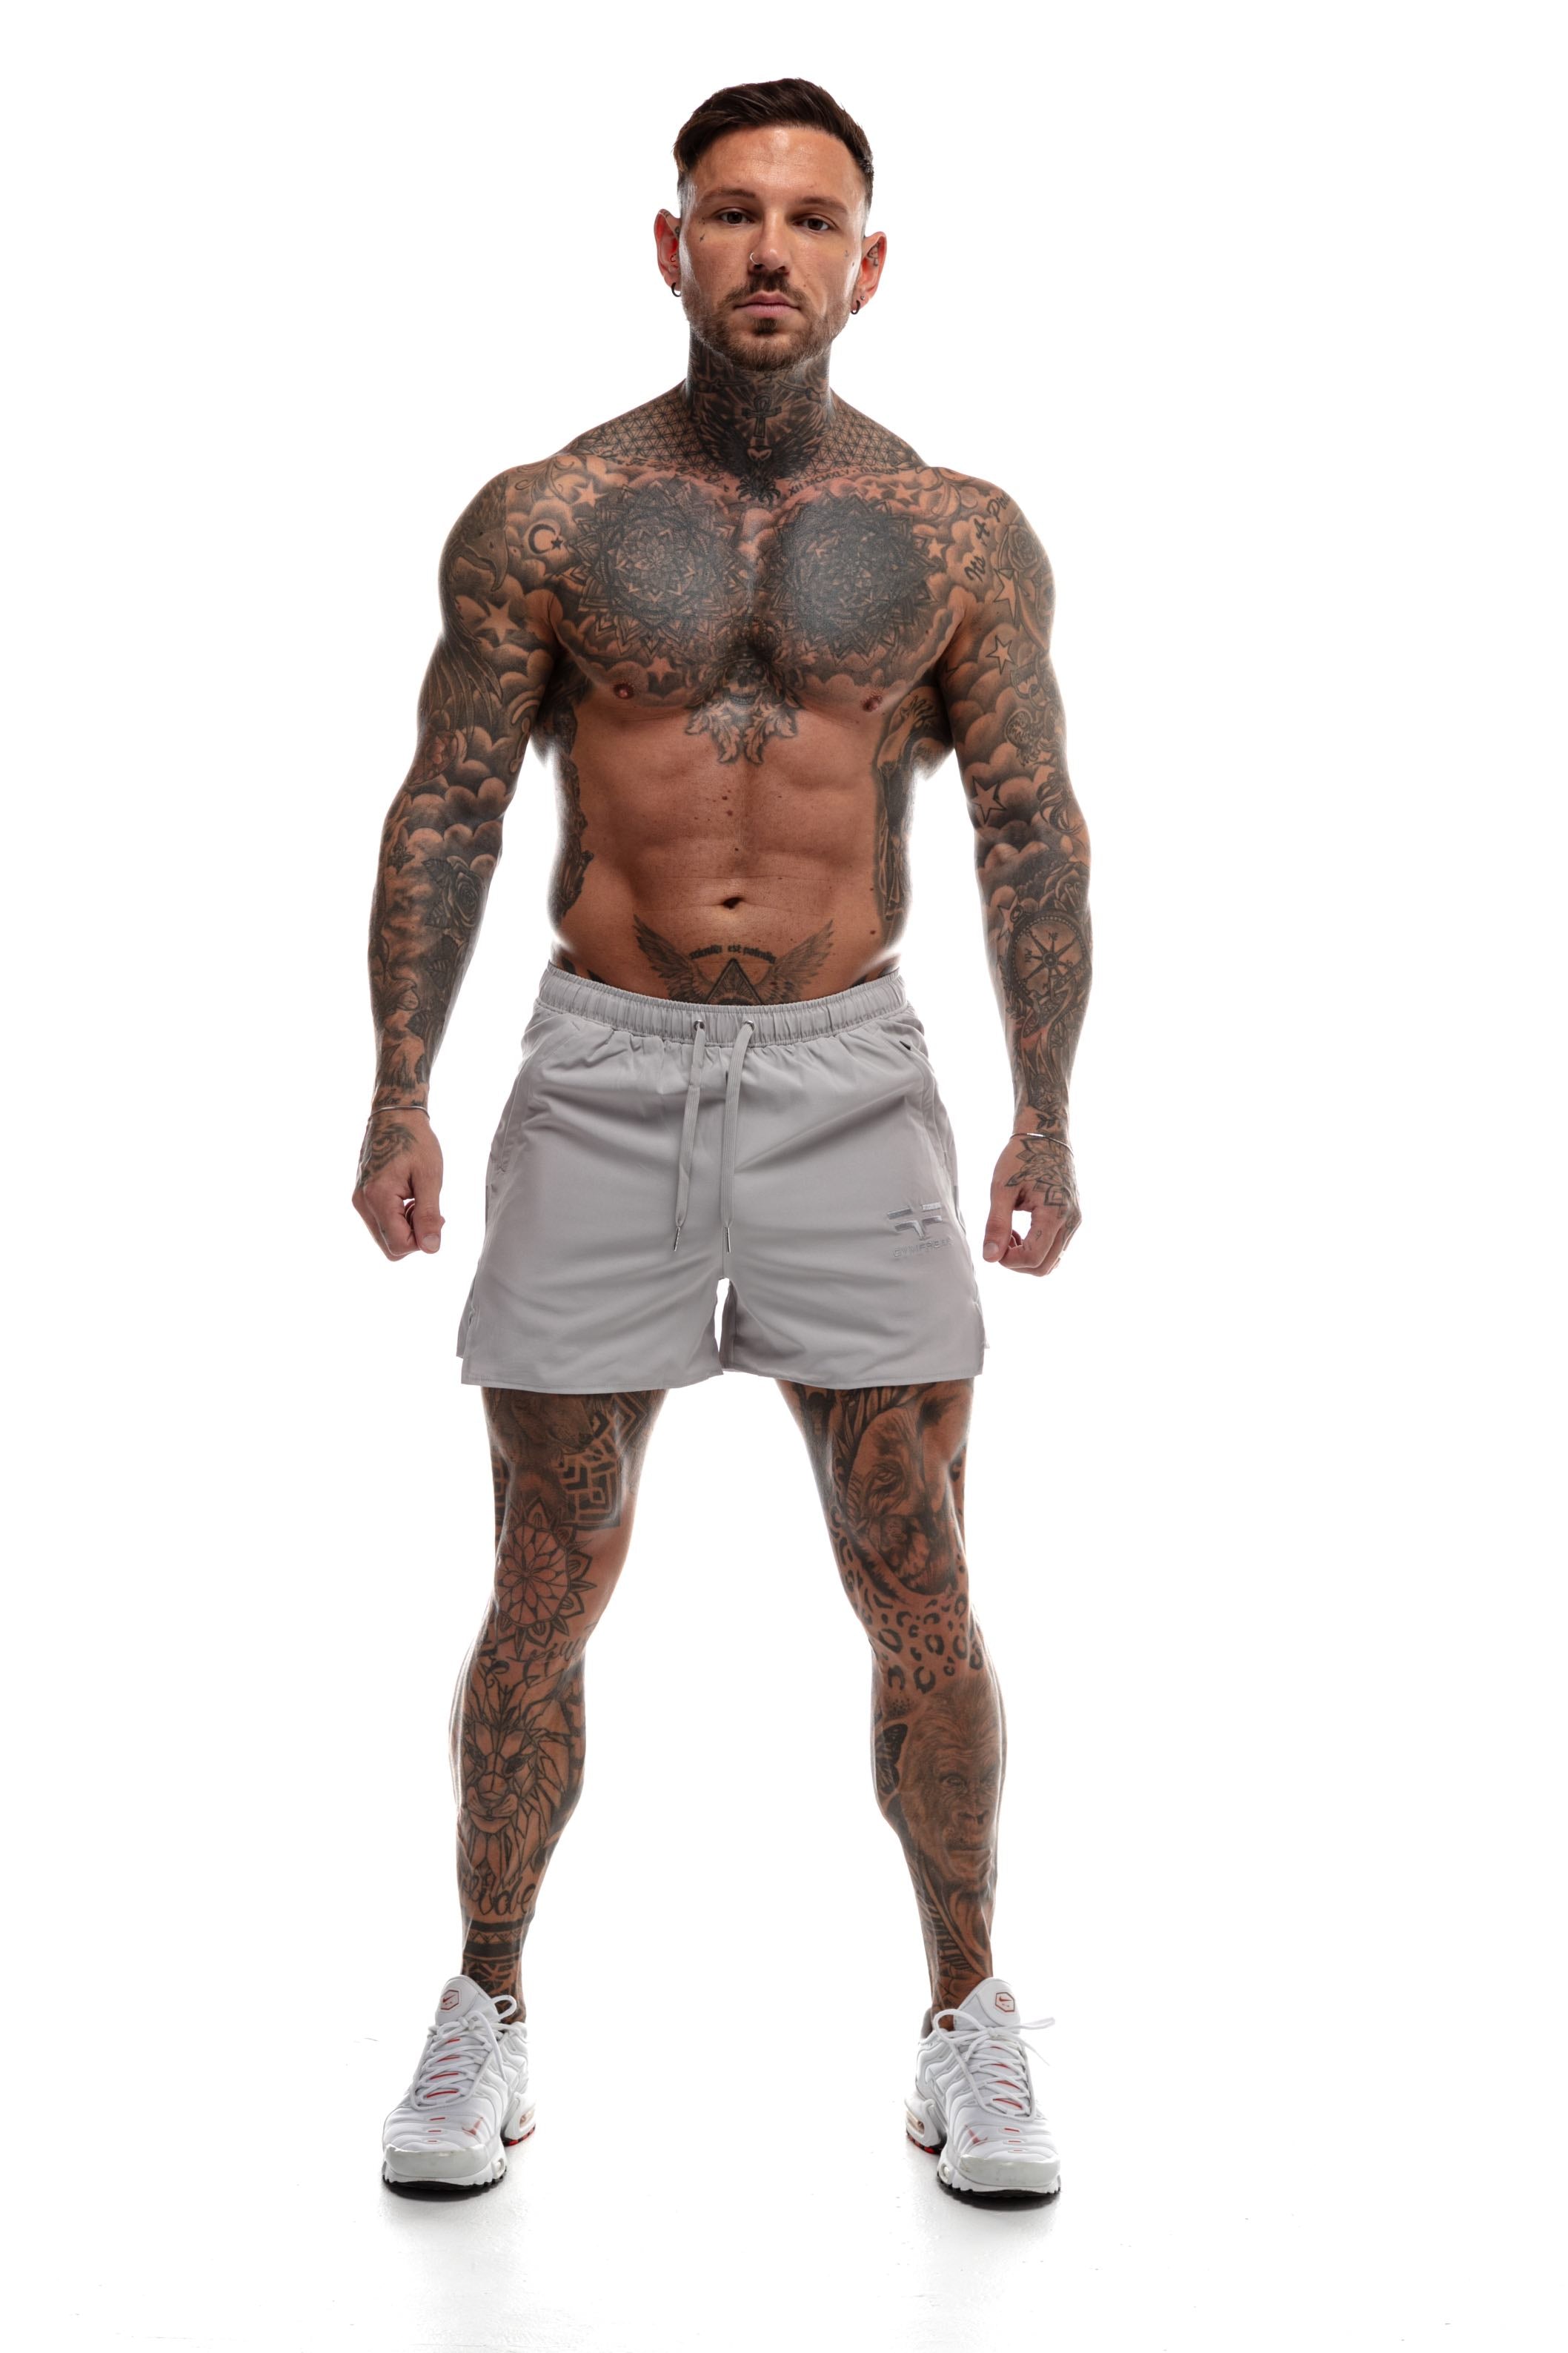 GymFreak Mens Fusion Shorts - Light Grey - 3.5 inch